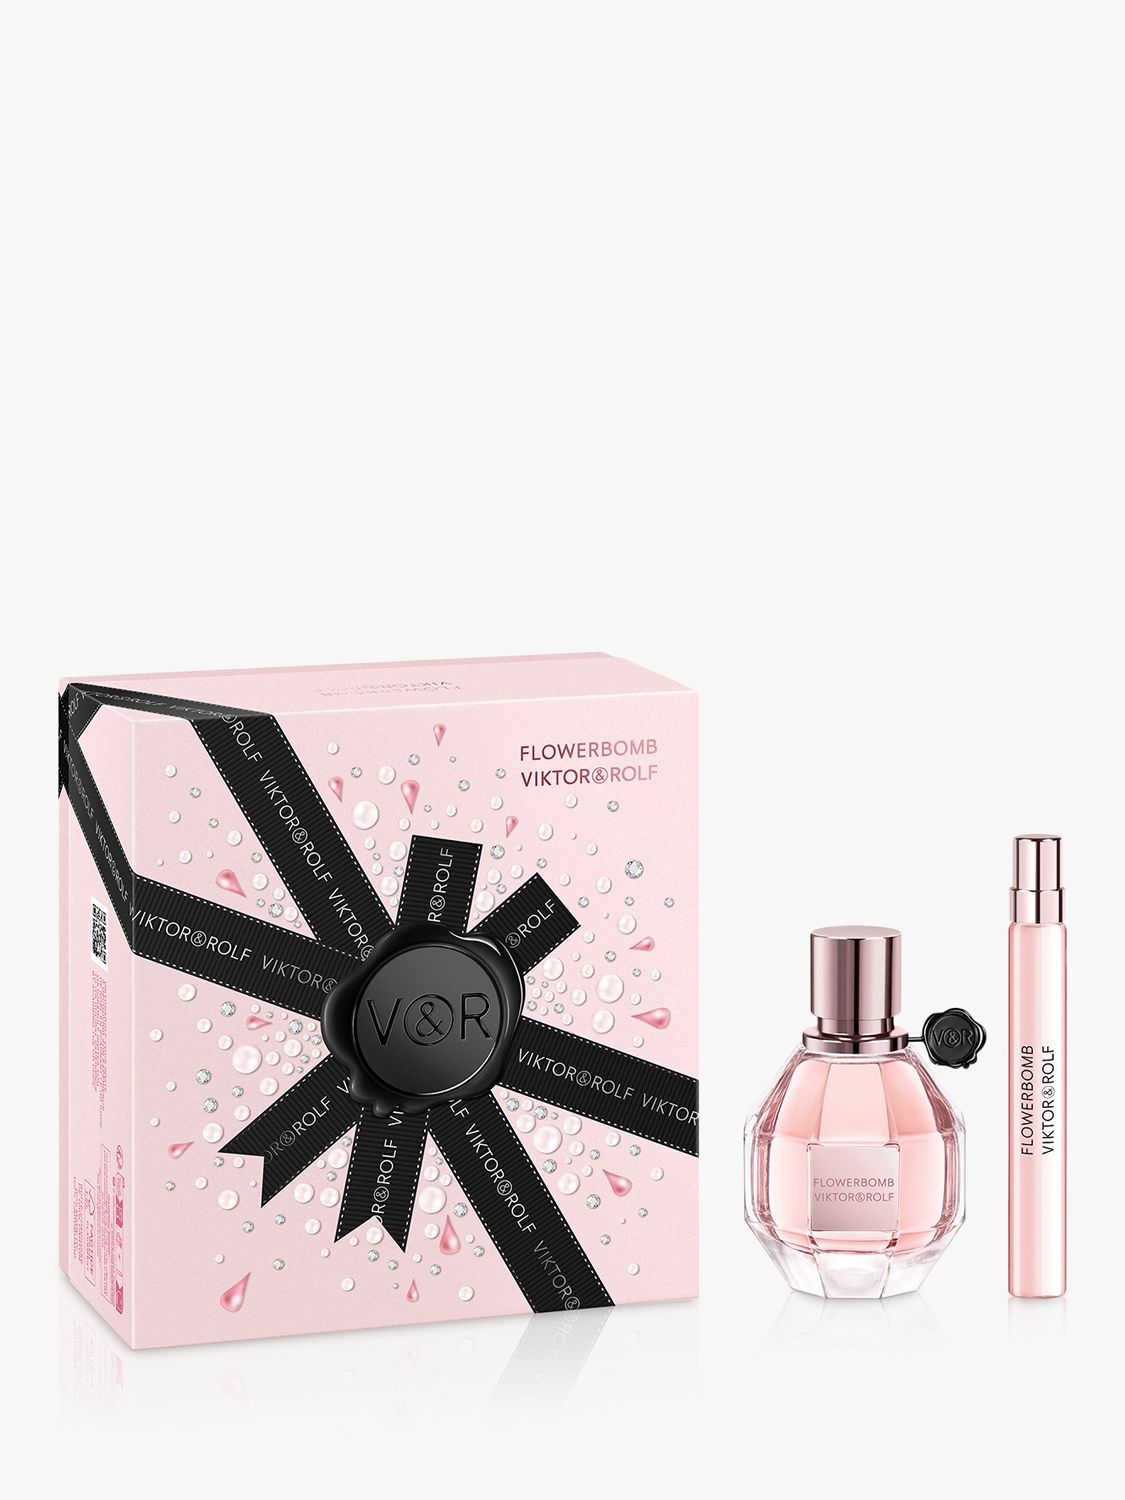 Viktor & Rolf Flowerbomb Eau de Parfum 50ml Fragrance Gift Set